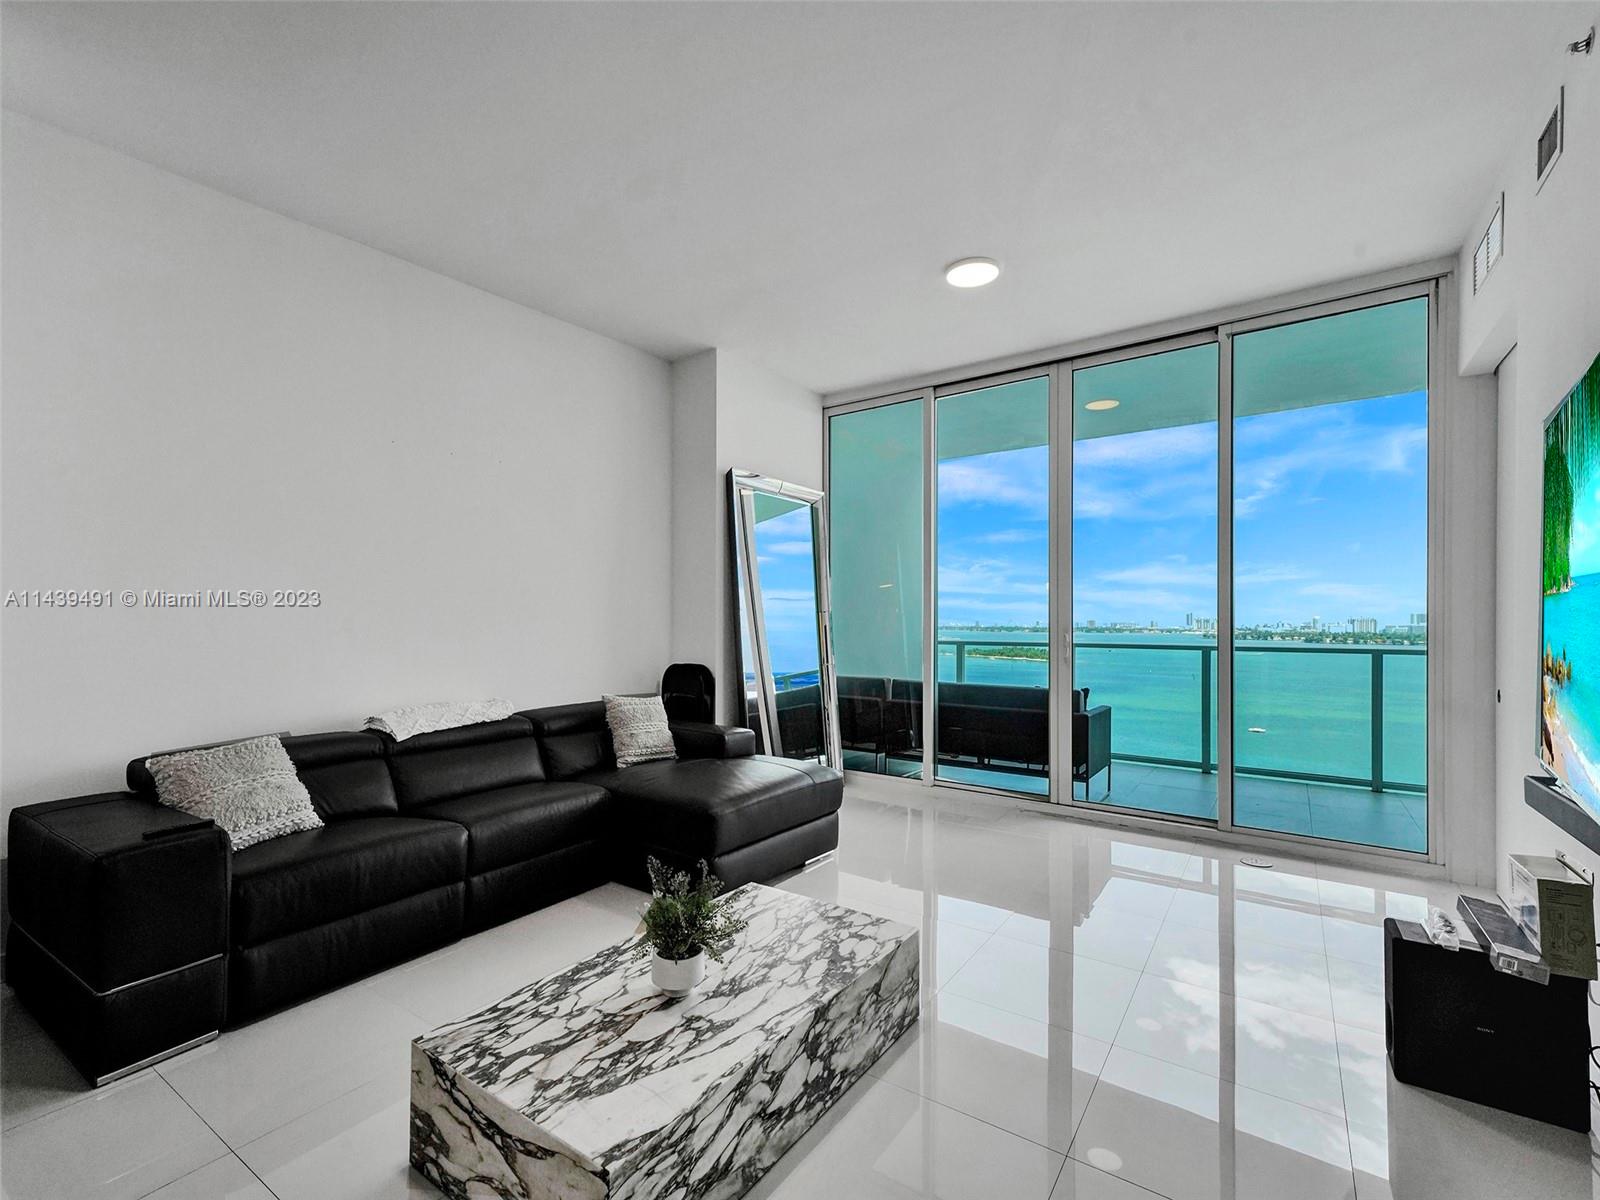 Property for Sale at 2020 N Bayshore Dr 1509, Miami, Broward County, Florida - Bedrooms: 2 
Bathrooms: 2  - $1,244,999